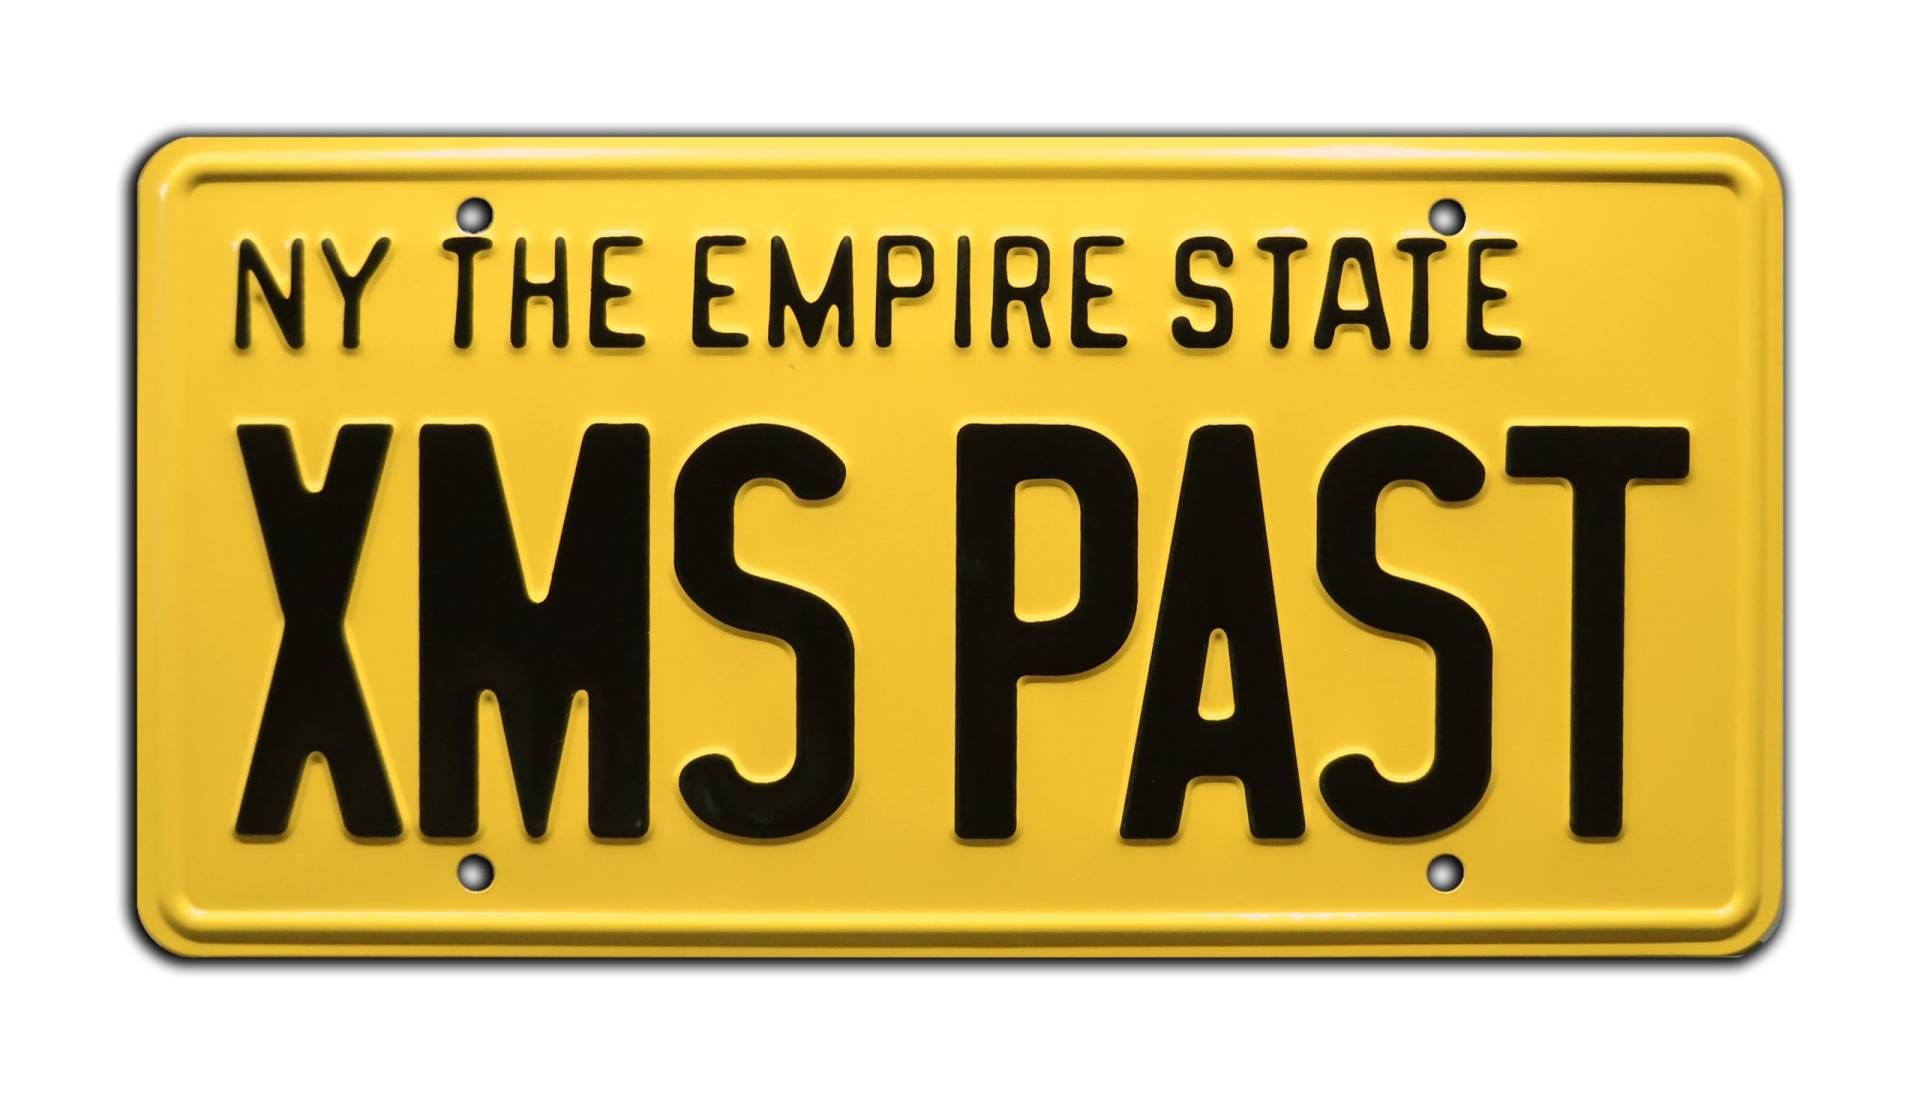 Scrooged | XMS Past | Metal Stamped License Plate von Celebrity Machines